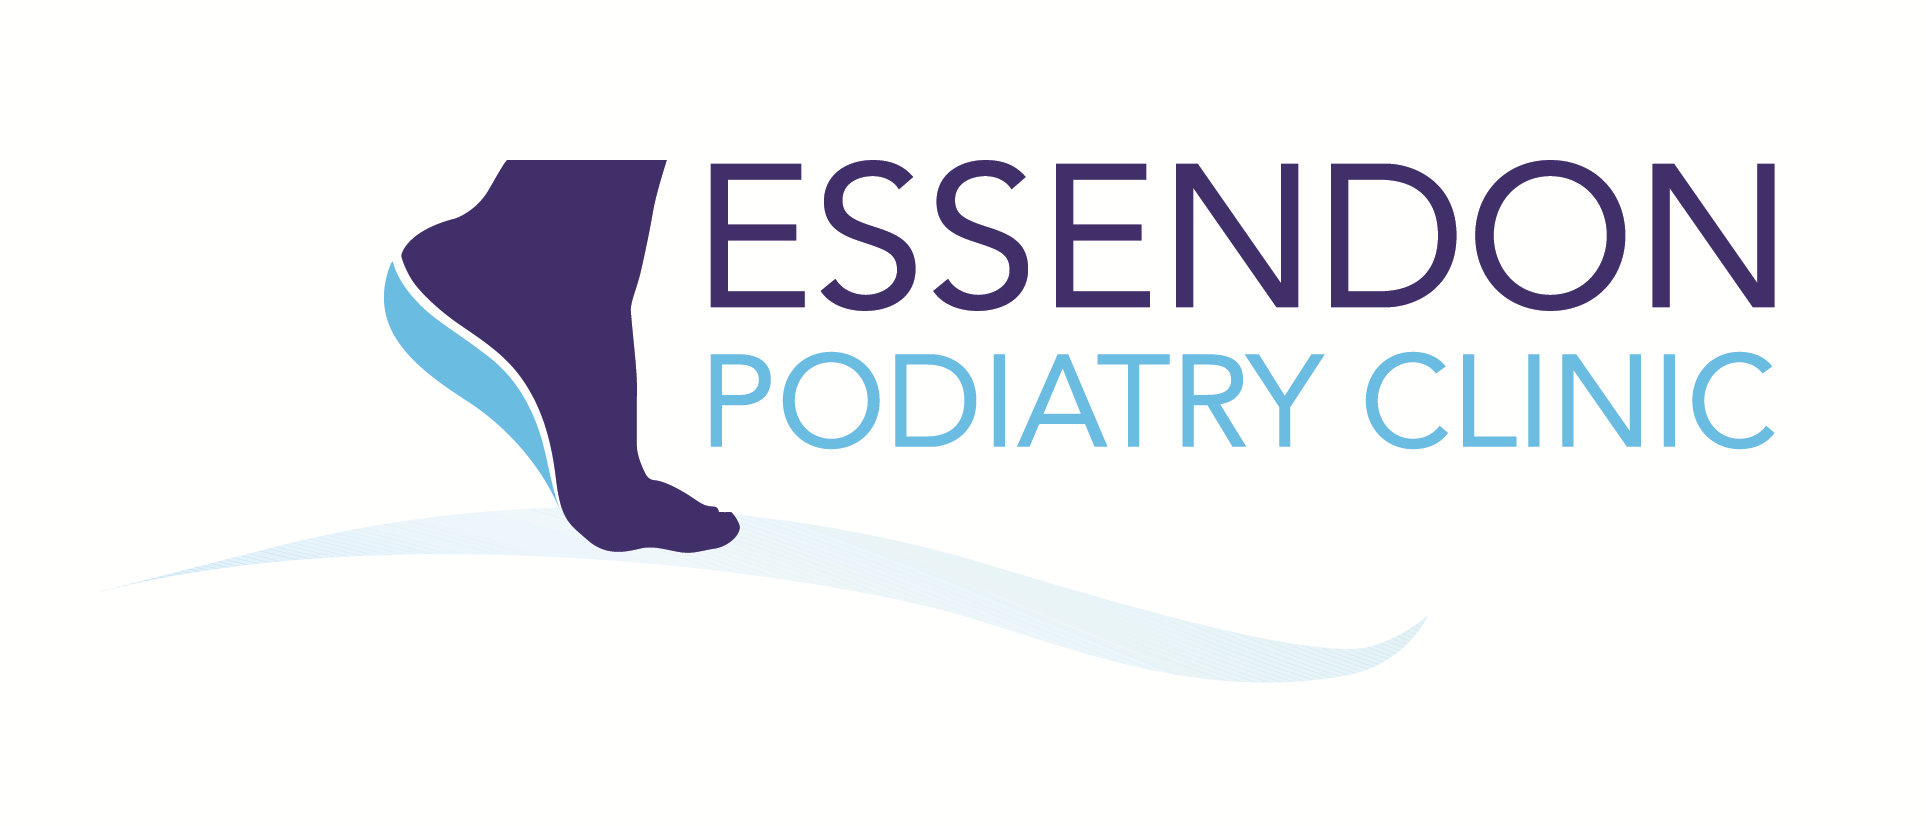 Essendon Podiatry Clinic Logo